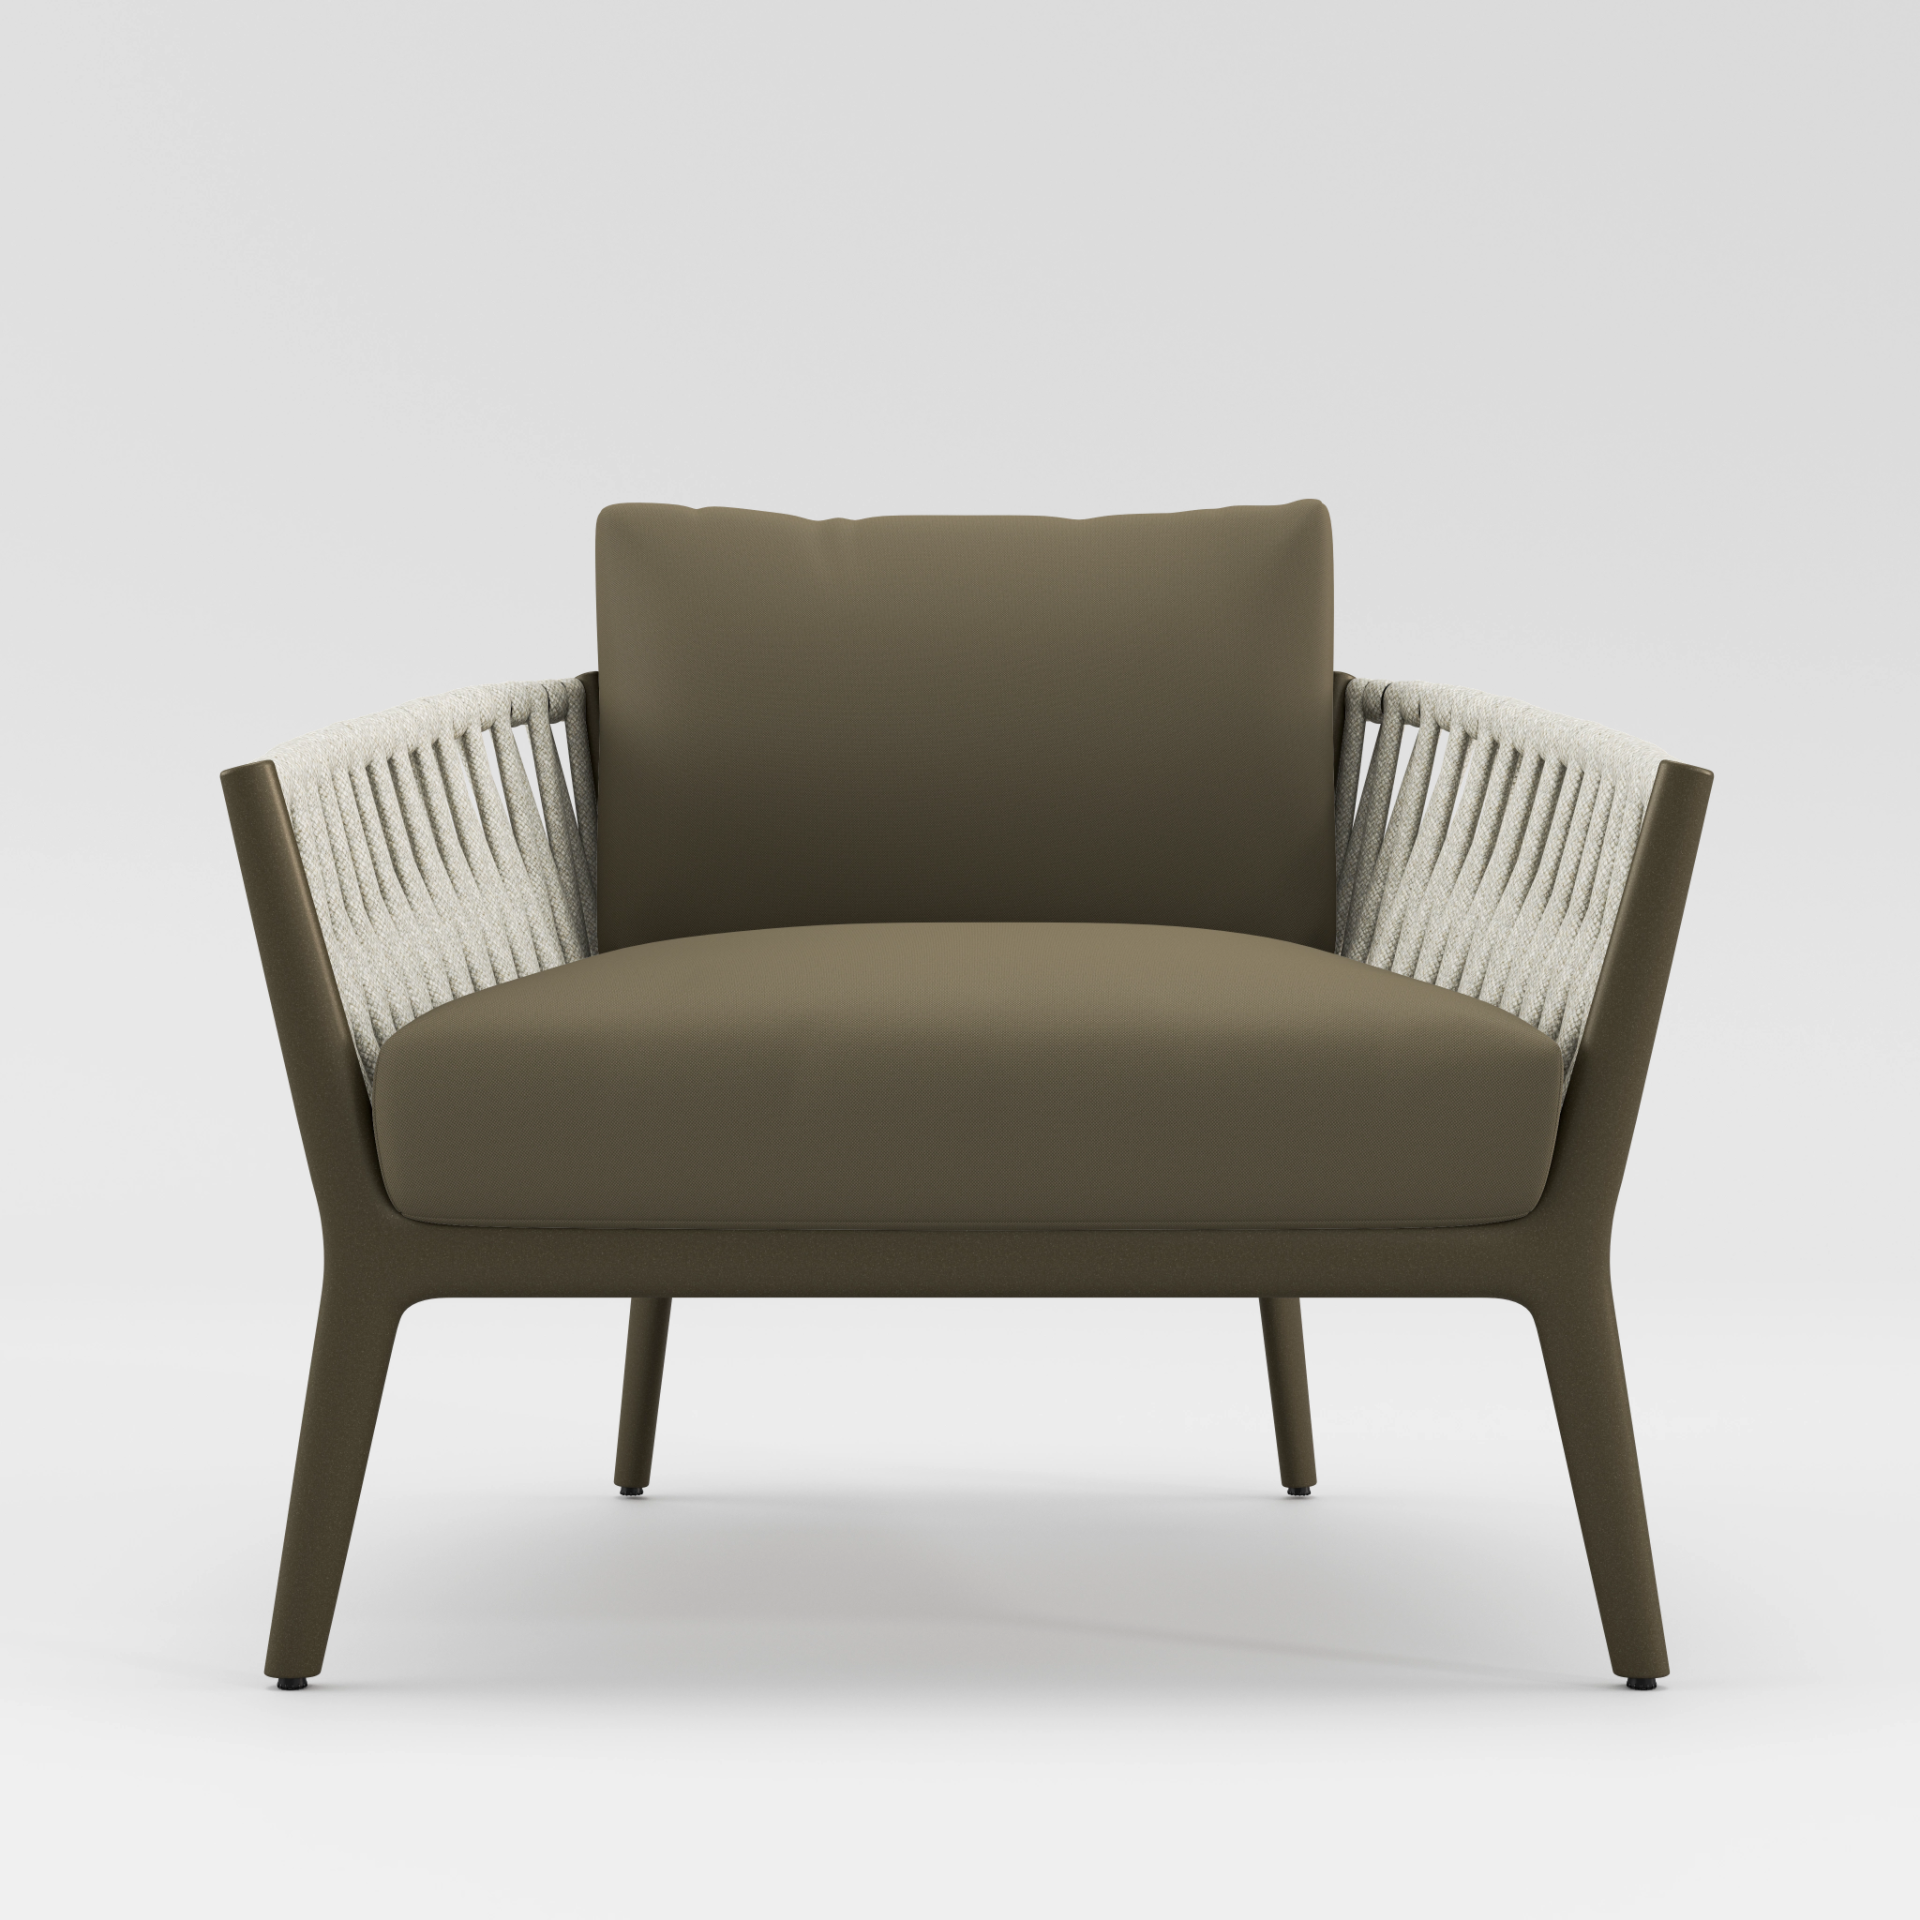 H Lounge Chair by Brown Jordan